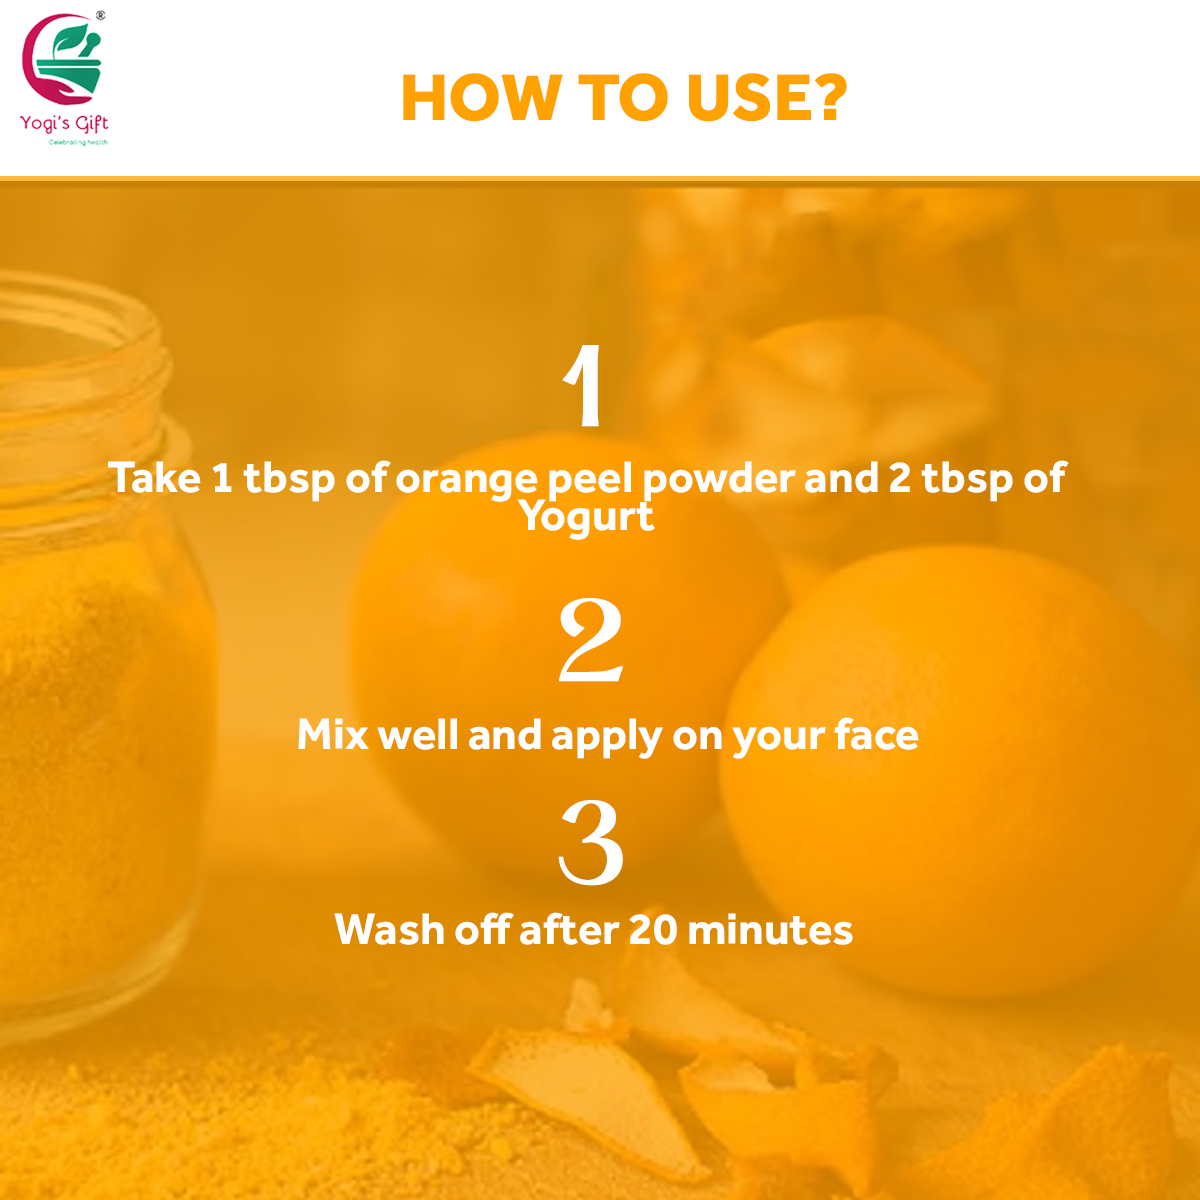 Orange Peel Powder 8 oz | 100% Natural Care For Acne, Tan & Blackheads | Effective DIY Face Mask Ingredient | Rich in Vitamin C | Yogi's Gift®